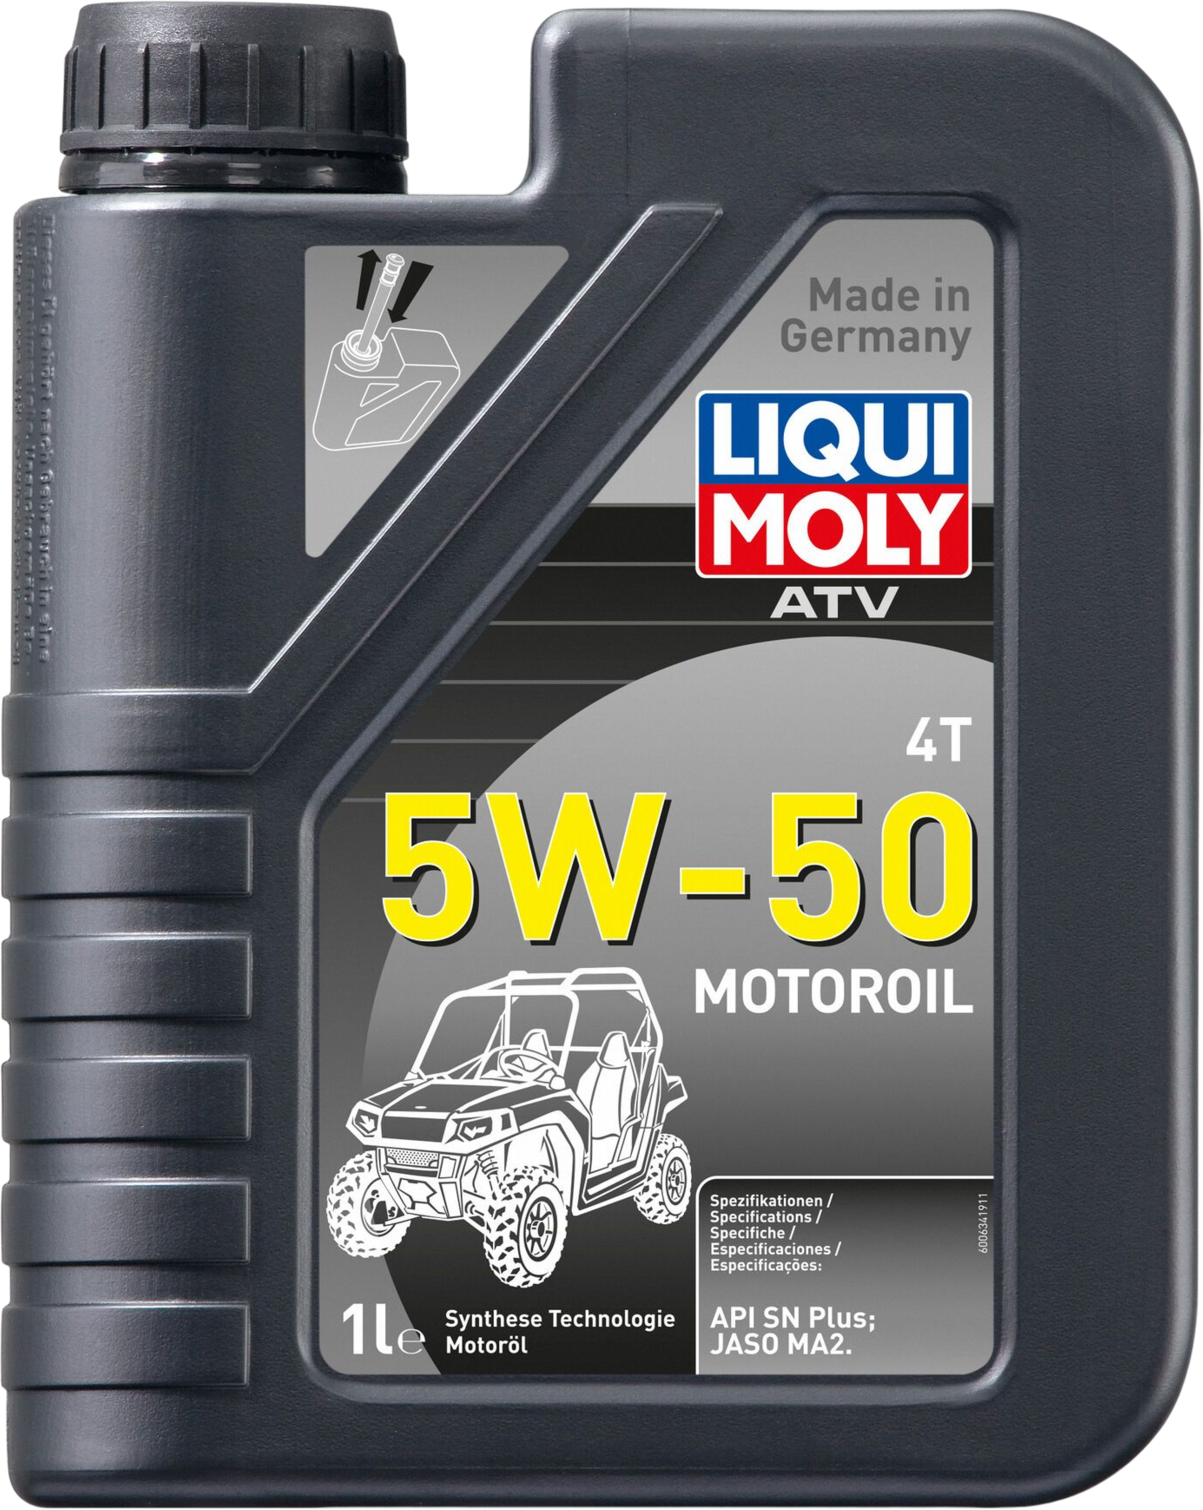 Liqui Moly ATV 4T Motoroil 5W-50, 6 x 1 lt detail 2